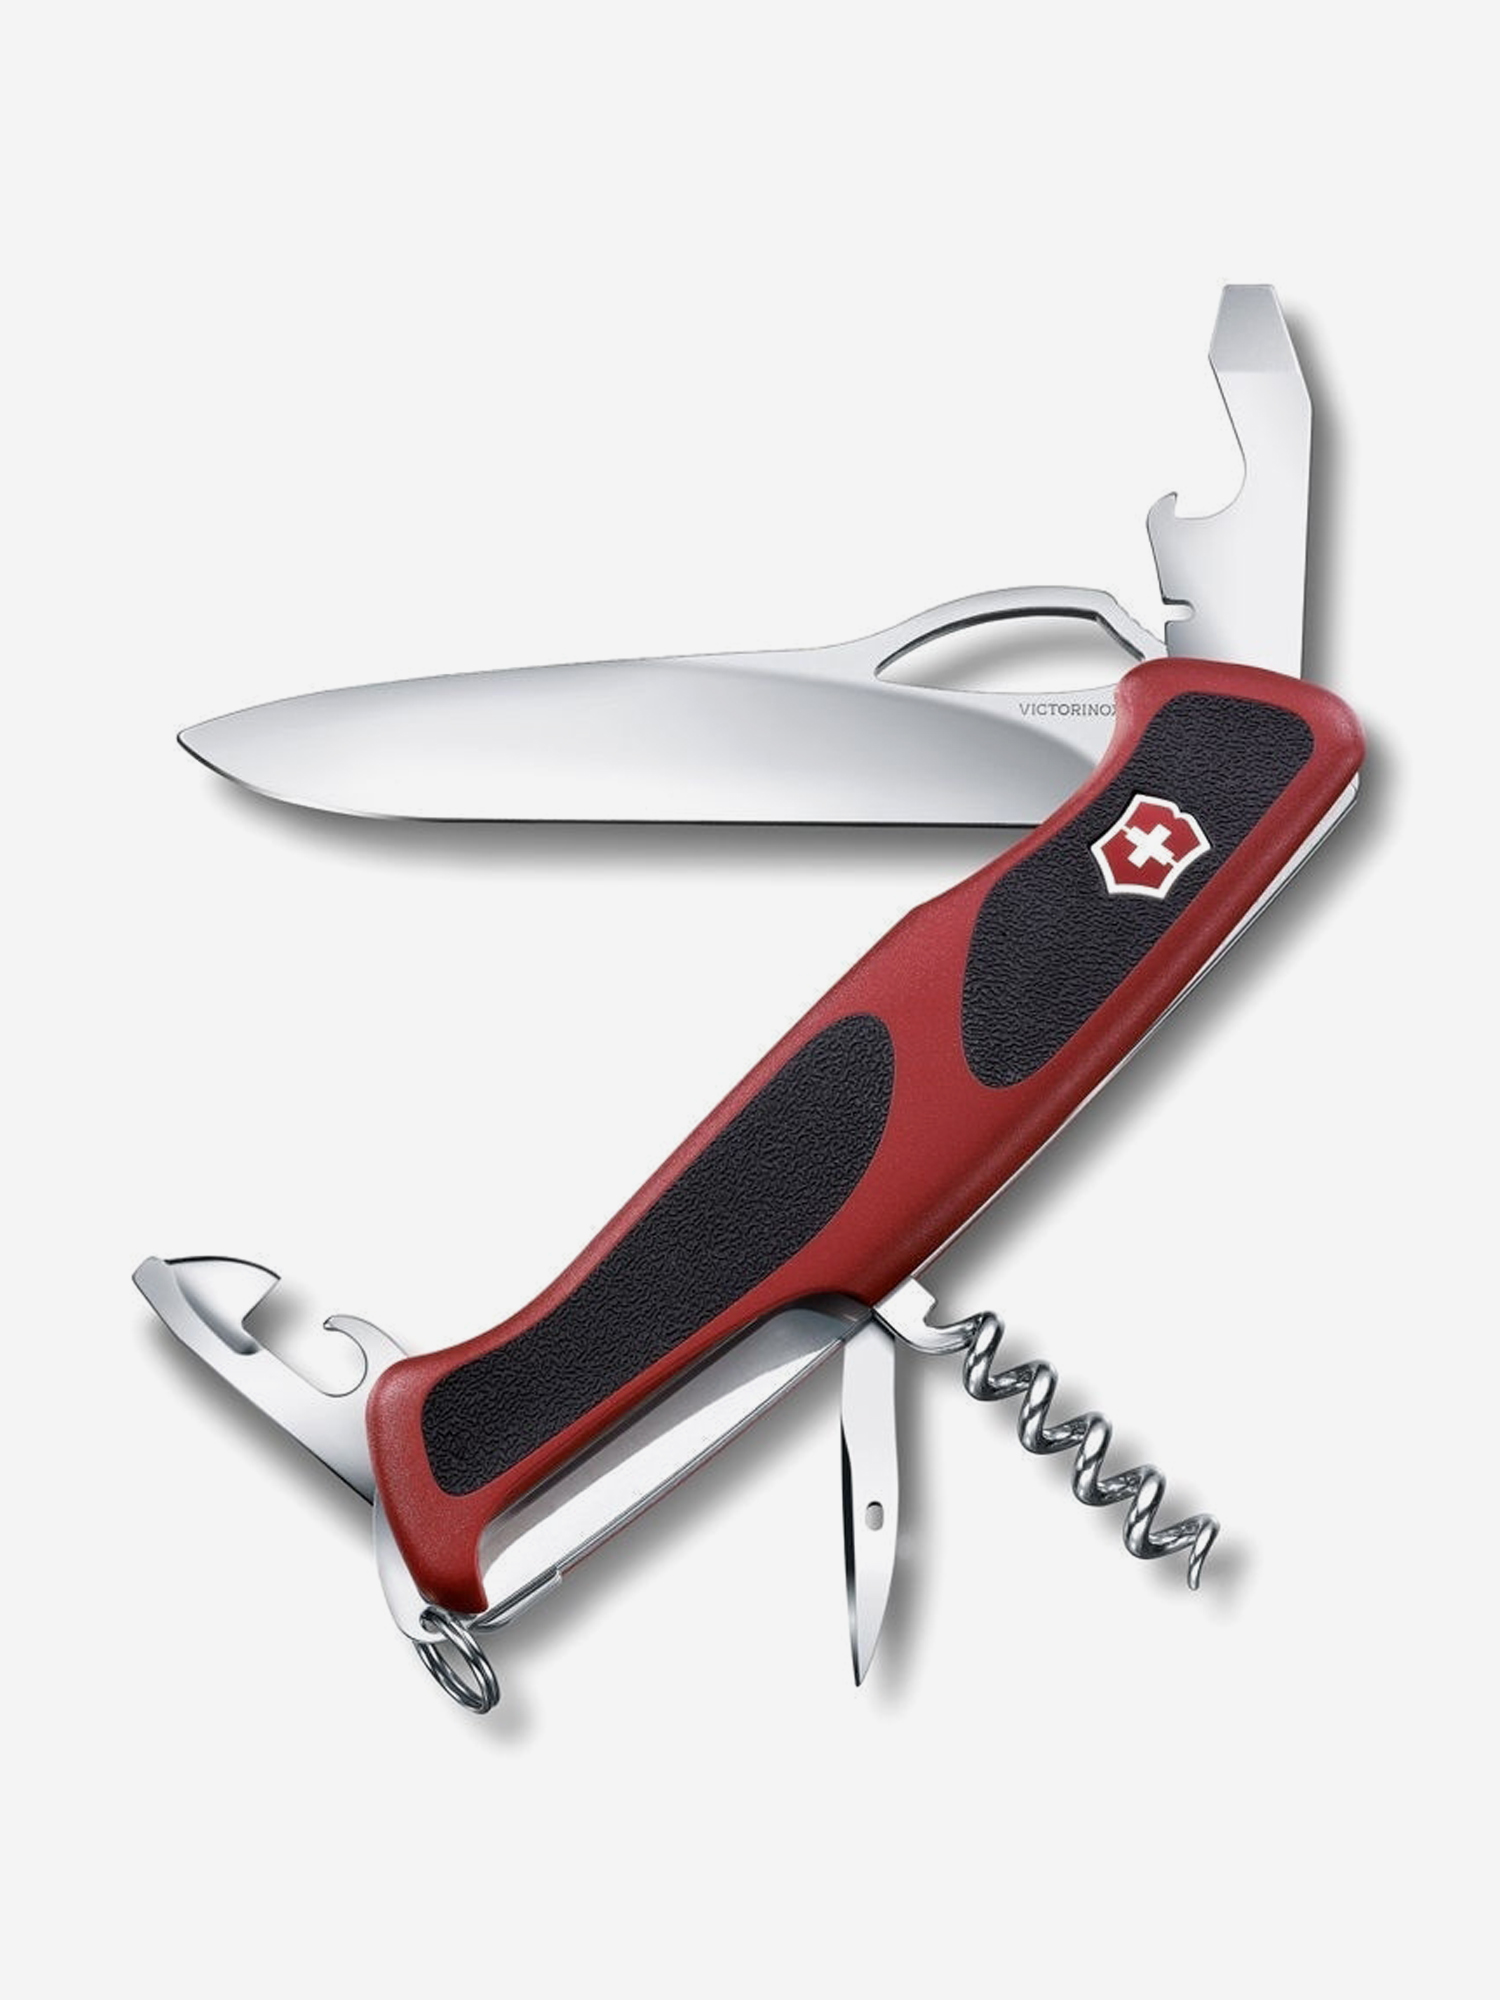 Нож складной Victorinox RangerGrip 61, 130 мм, 11 функций, Красный нож брелок victorinox classic minichamp 58 мм 16 функций красный